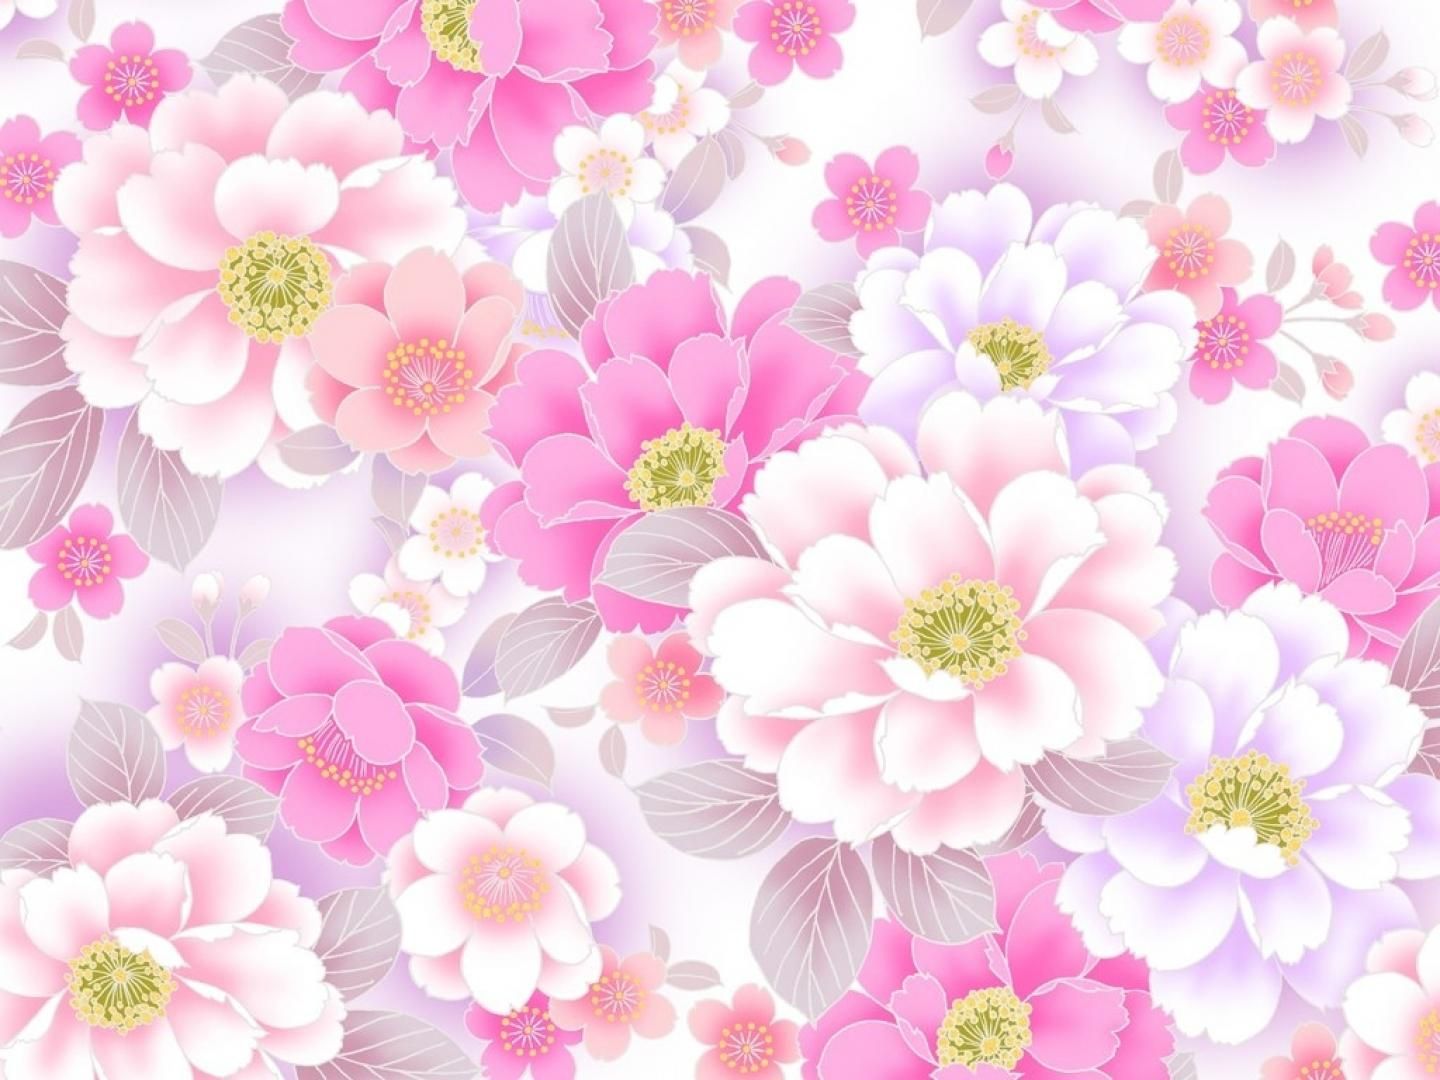 tapete de flores,blütenblatt,blume,rosa,pflanze,blumendesign